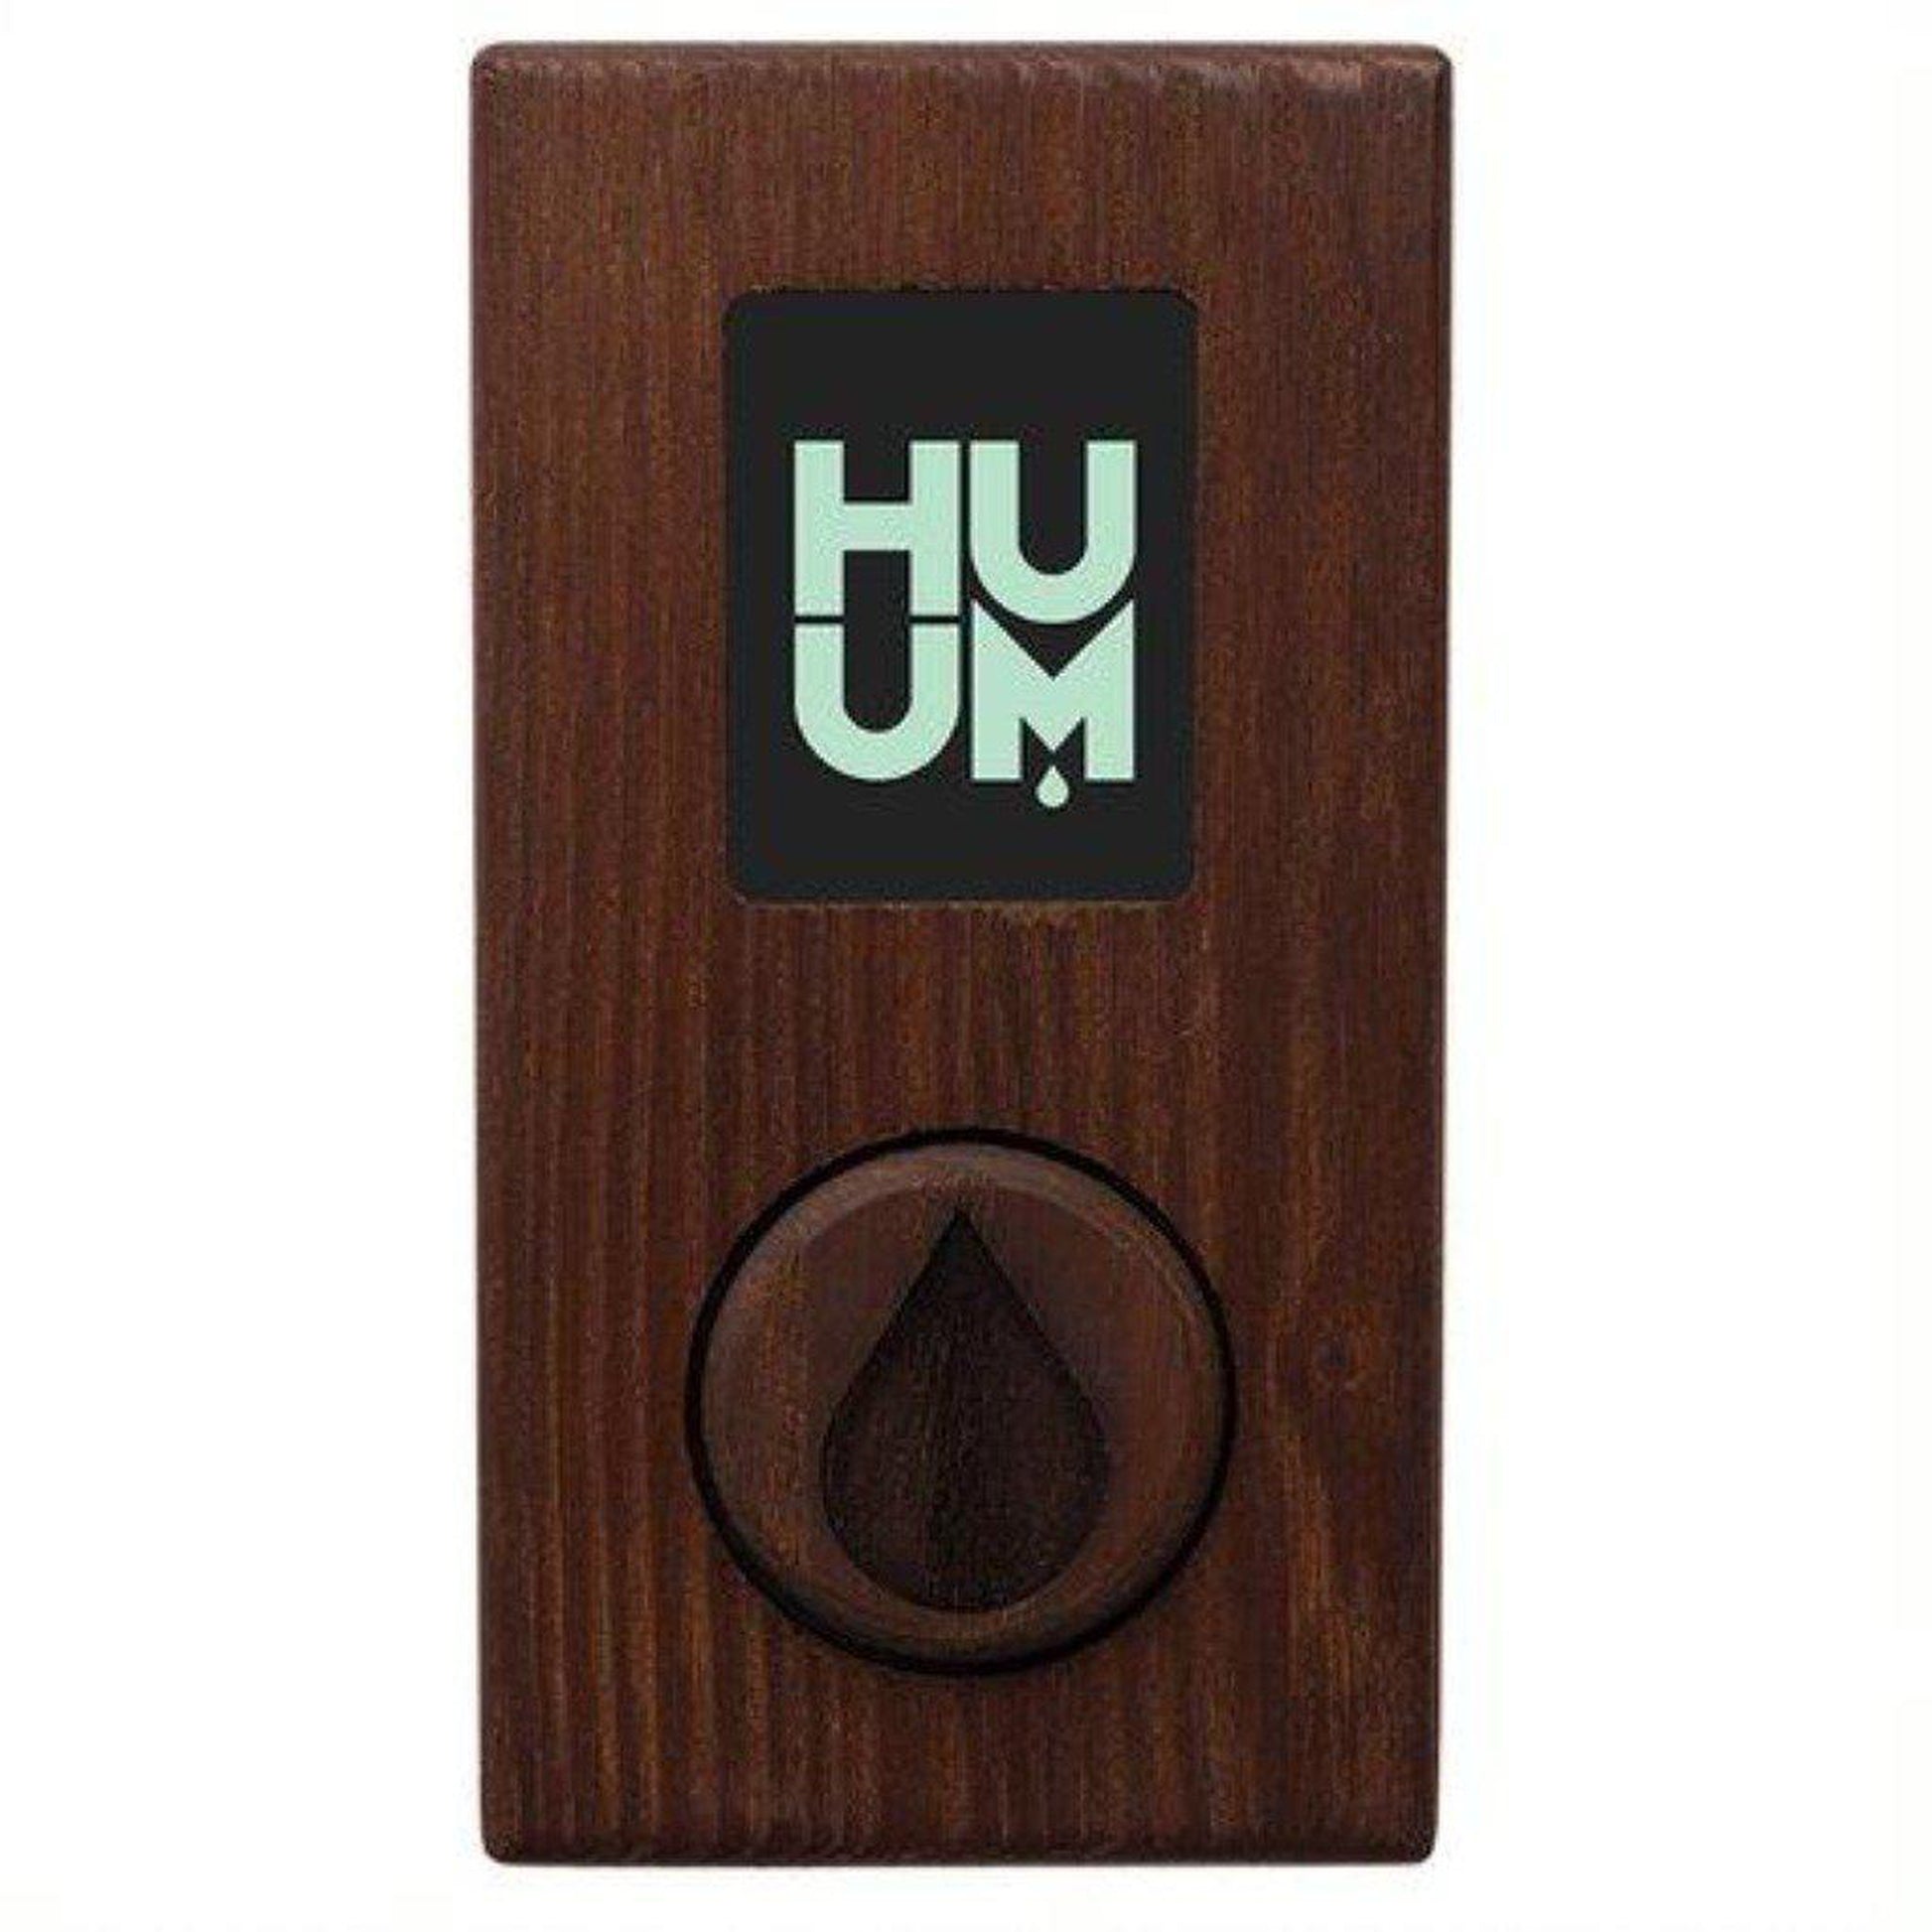 HUUM Drop UKU Panel